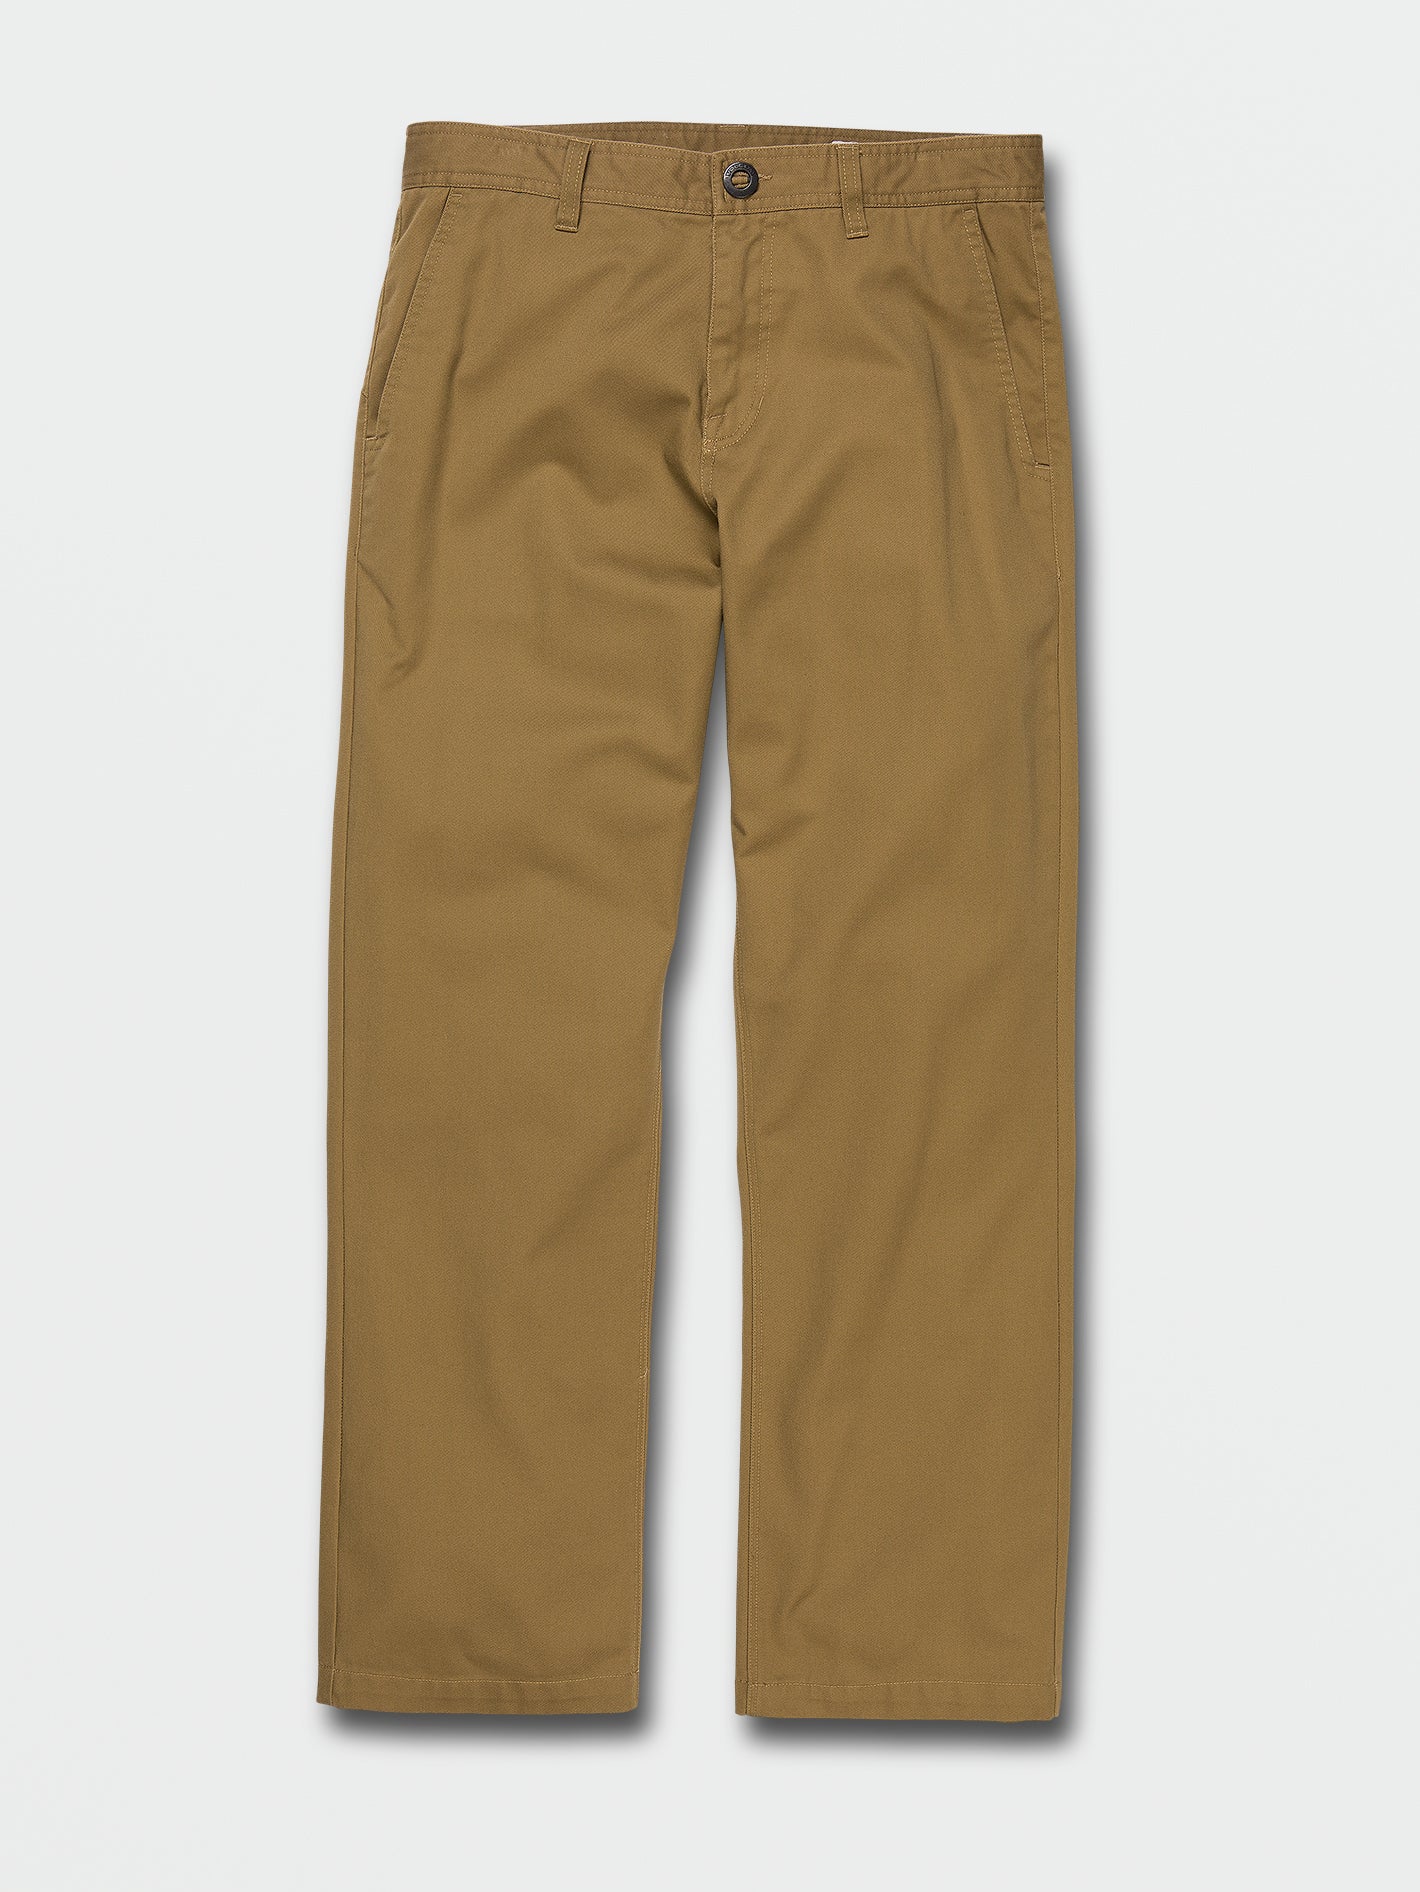 Daymaker Pants, Men's Khaki